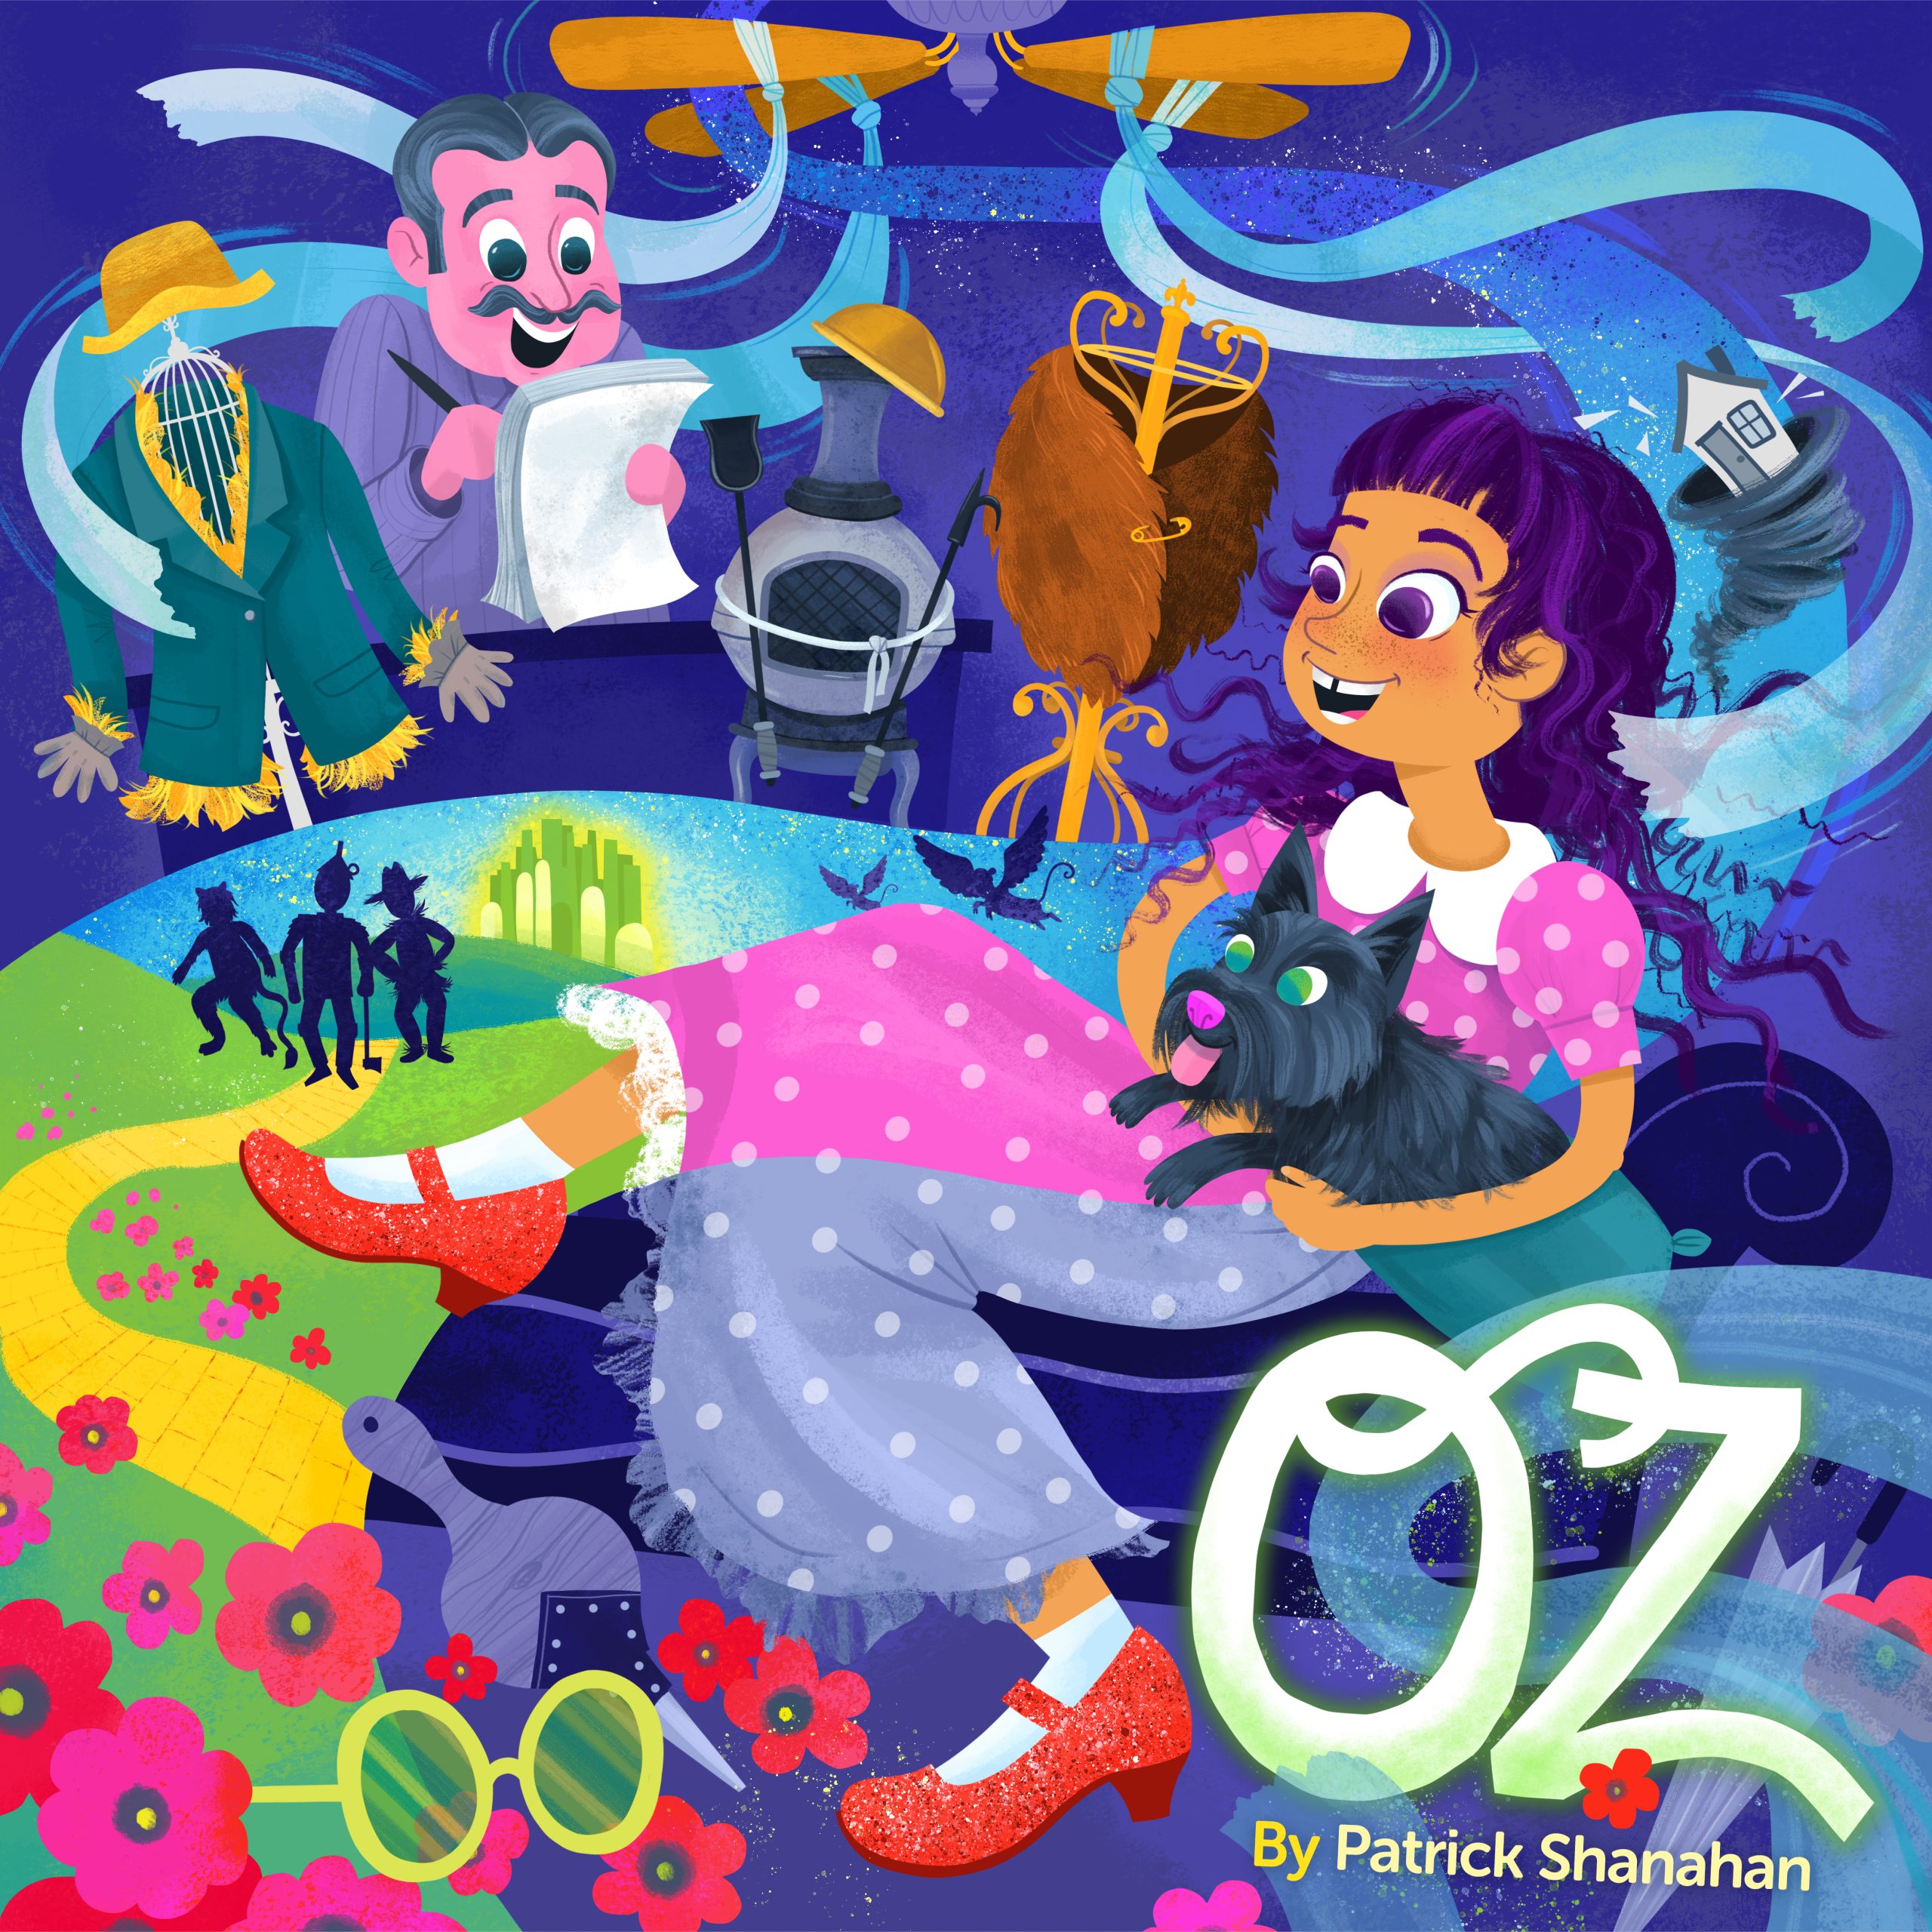 Colourful show artwork for Oz.